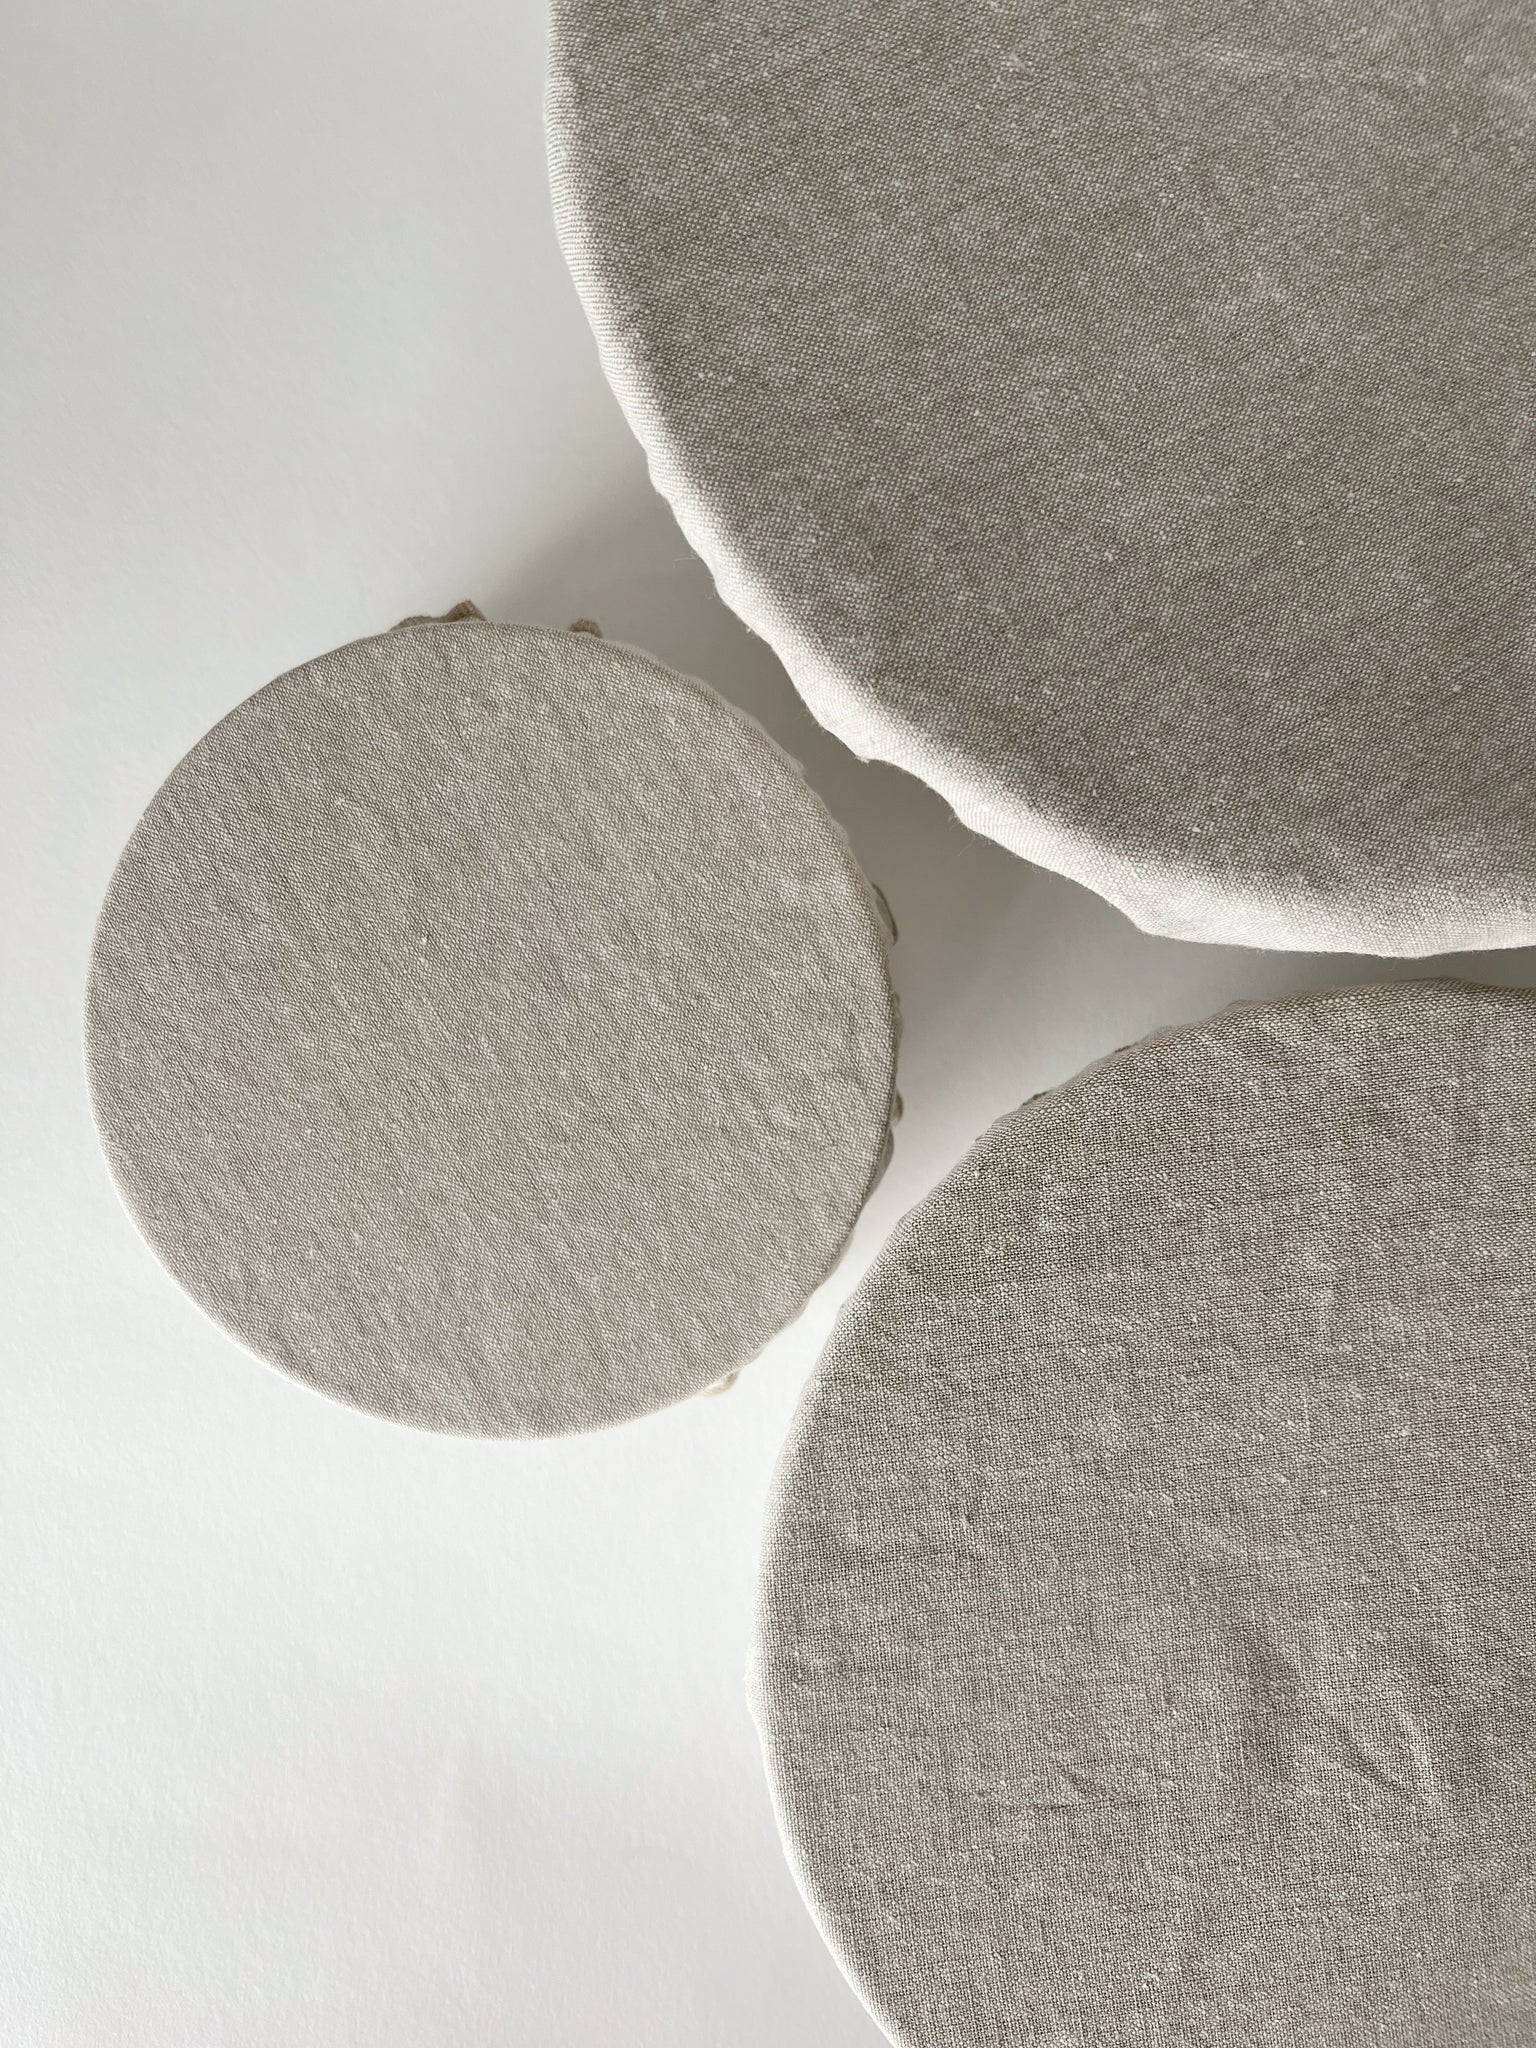 Handmade Reusable Bowl Covers | set of 3